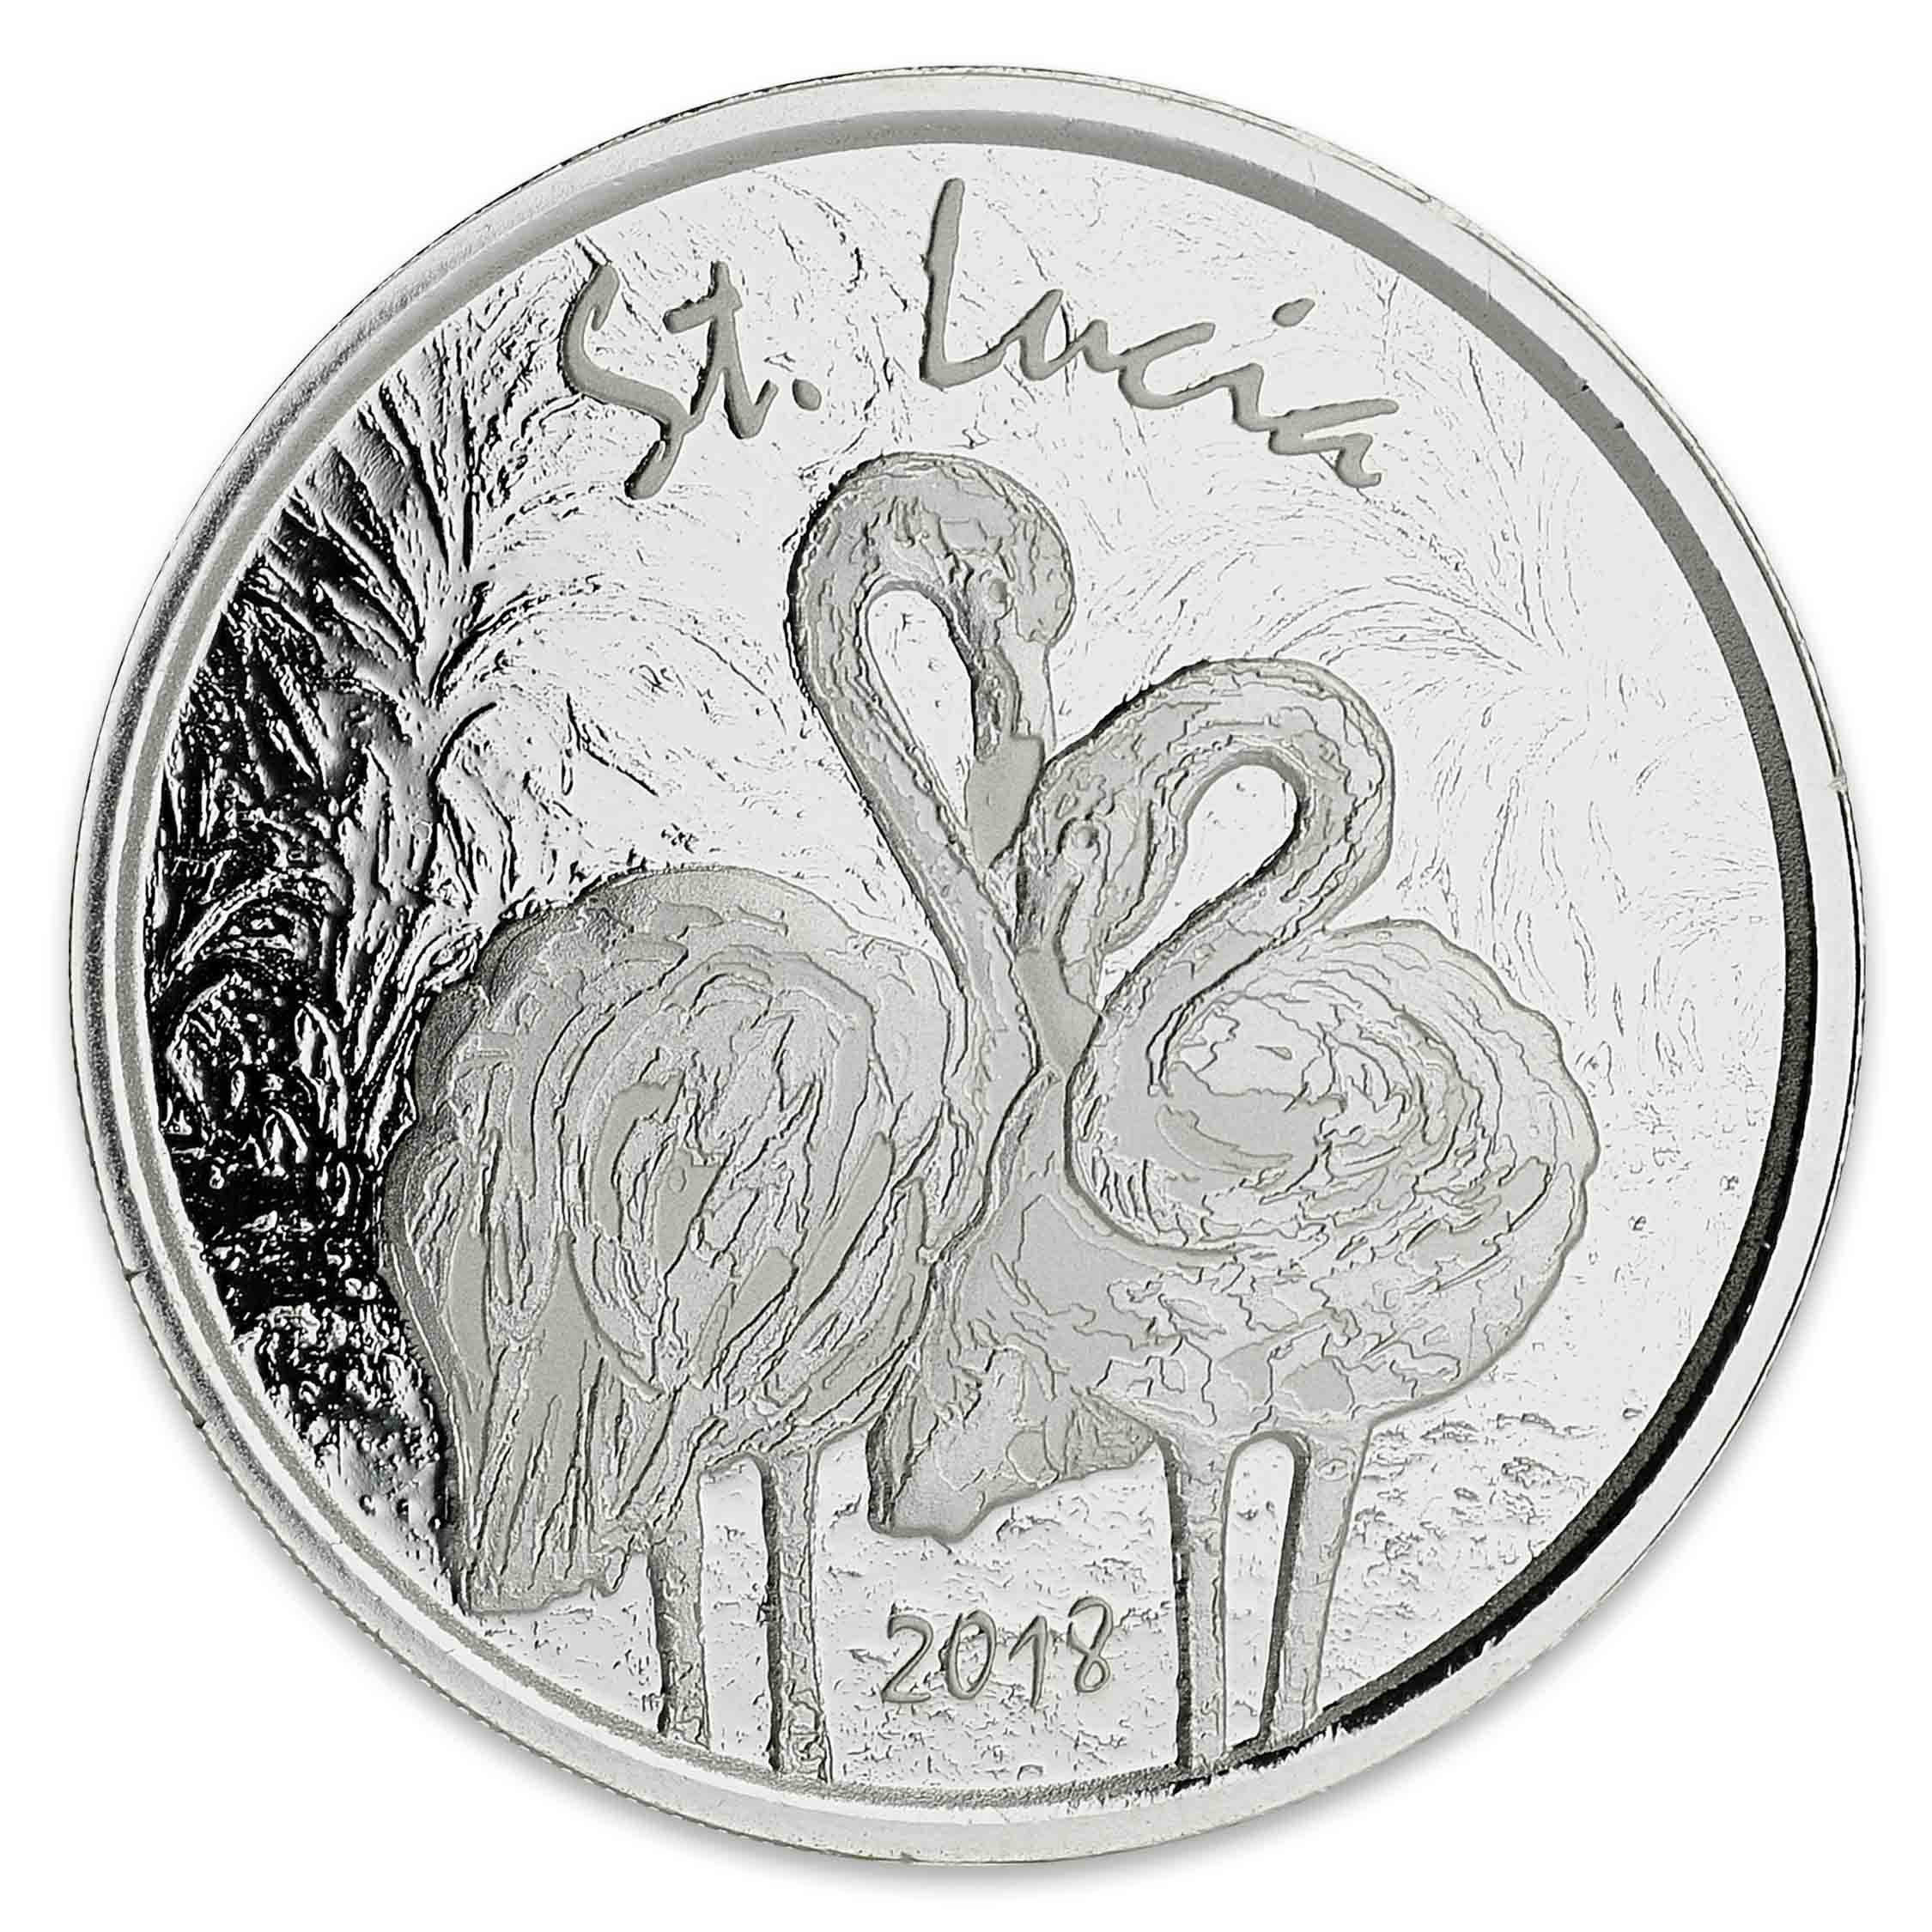 2018 EC8 St. Lucia Flamingo 1 oz Silver Coin | Scottsdale Mint Legal Tender